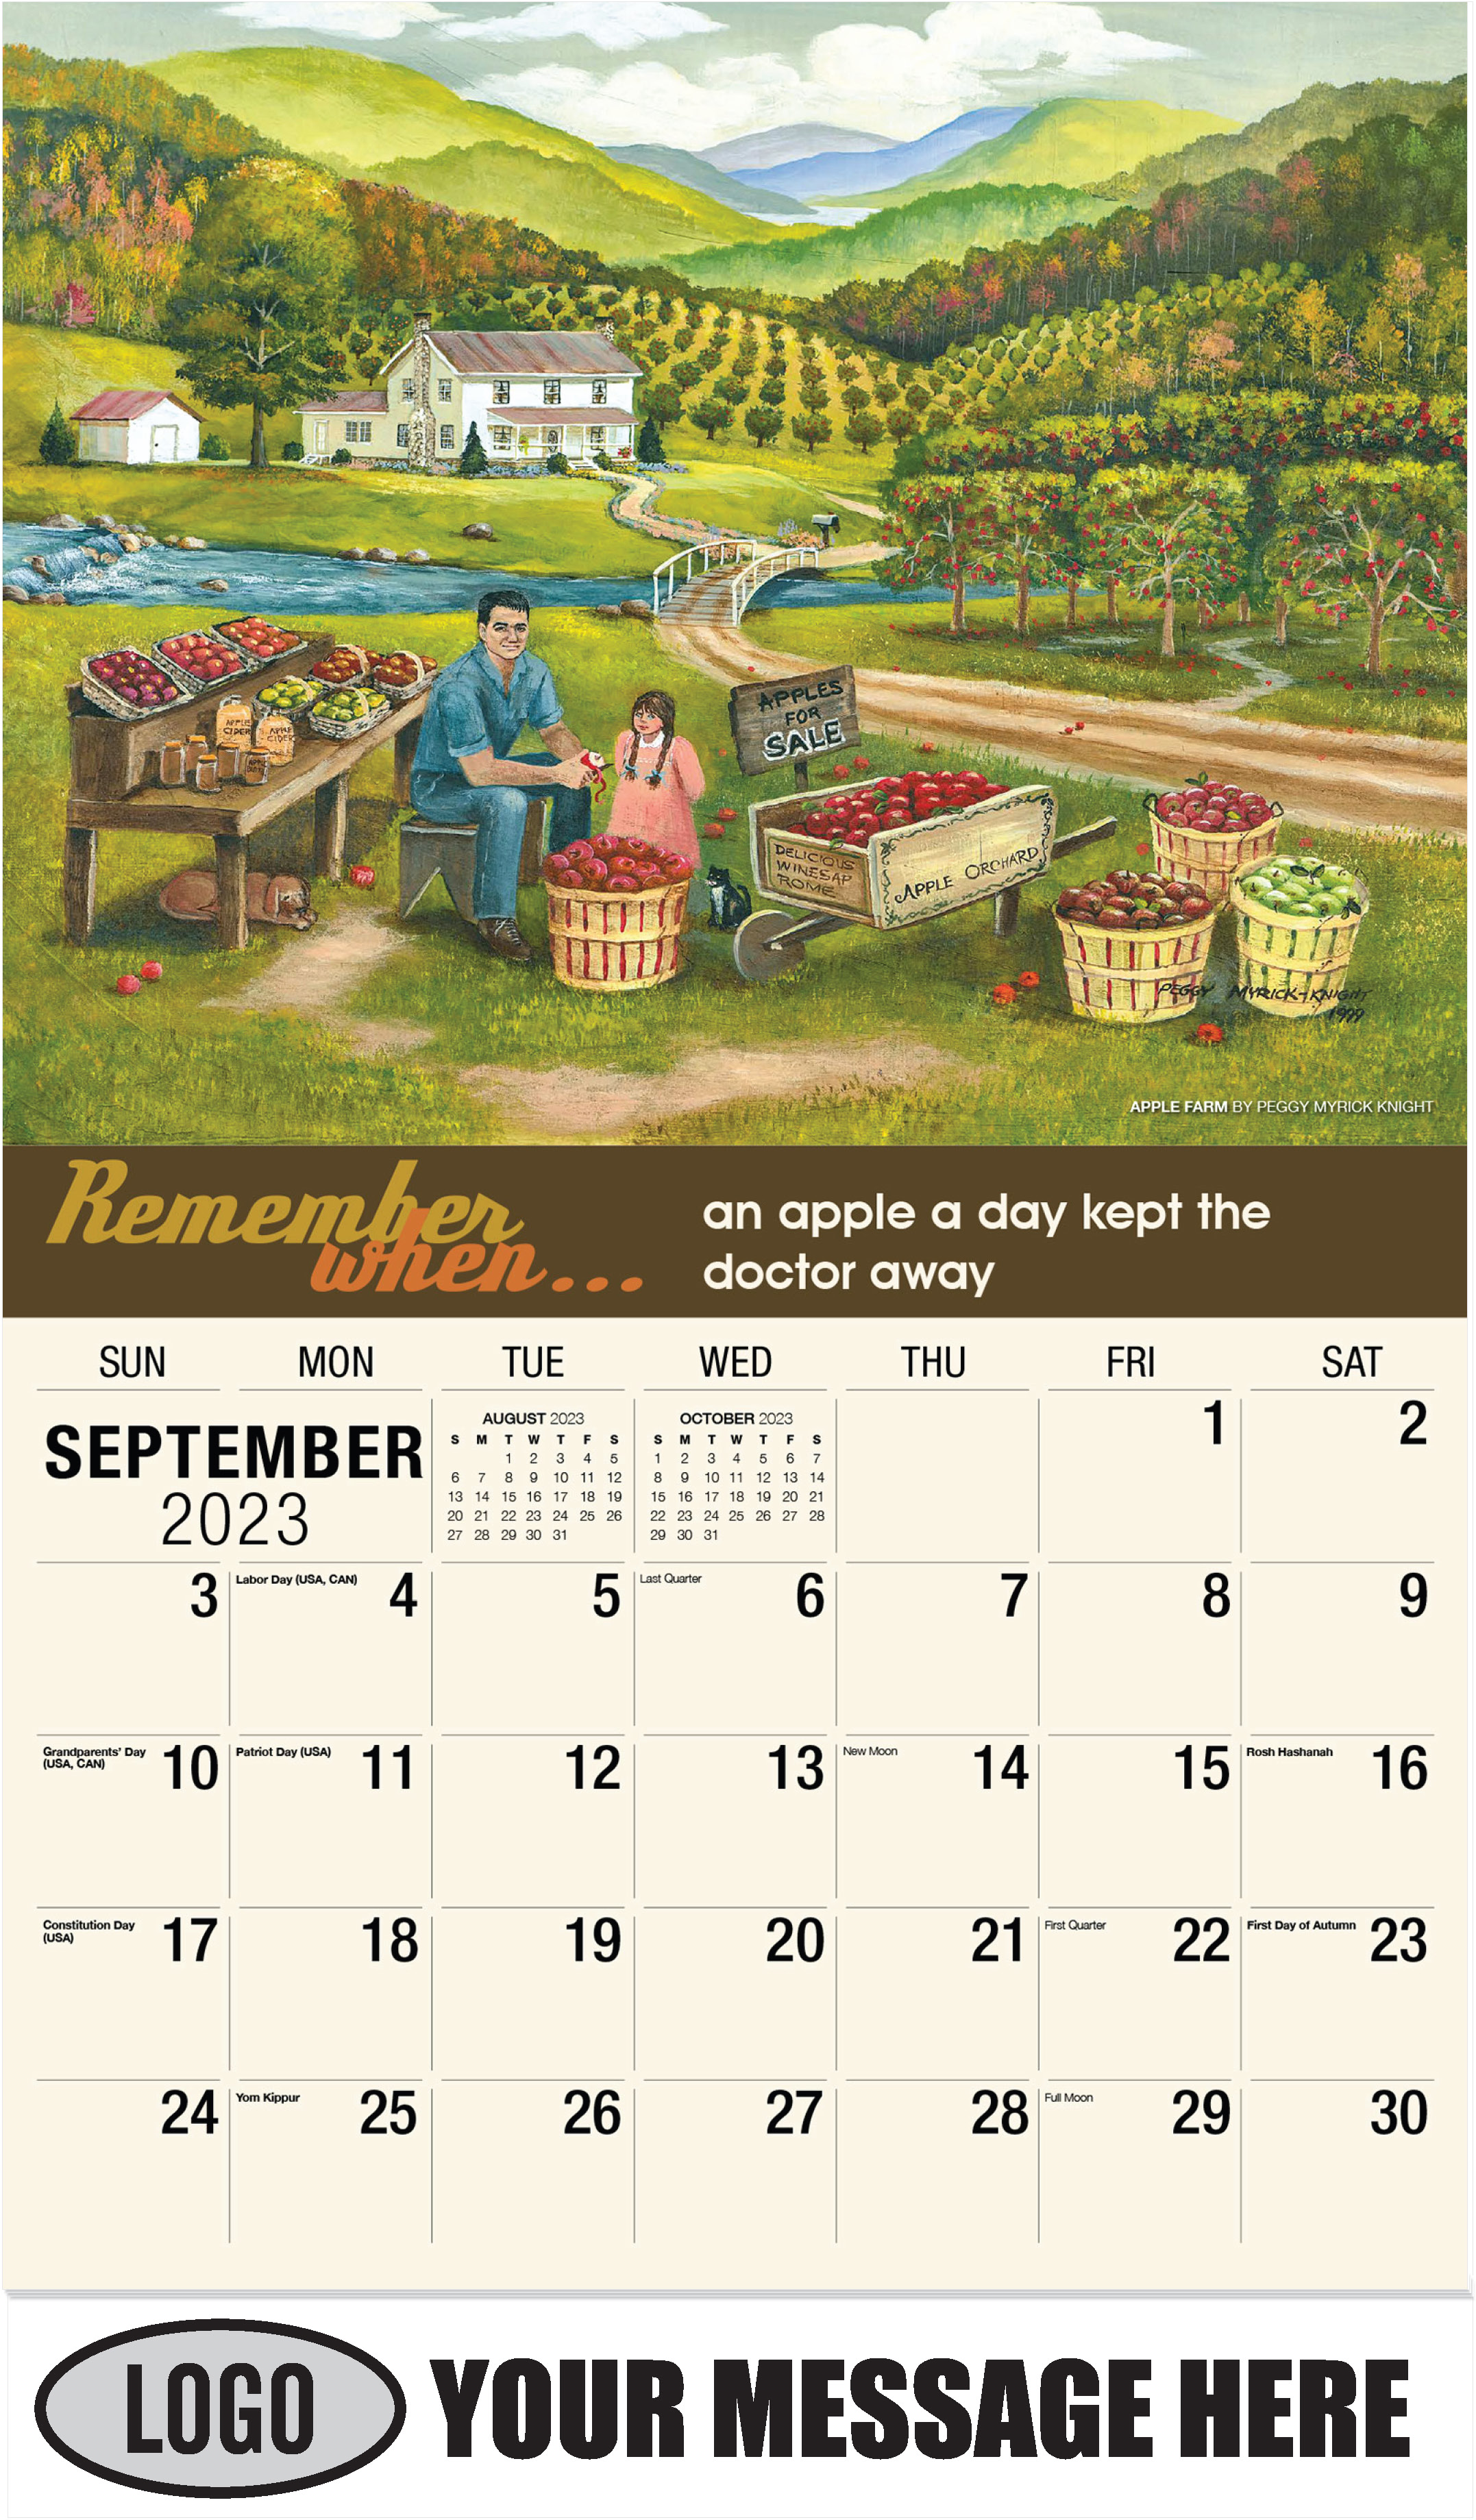 Apple Farm by Peggy Myrick Knight - September - Remember When 2023 Promotional Calendar